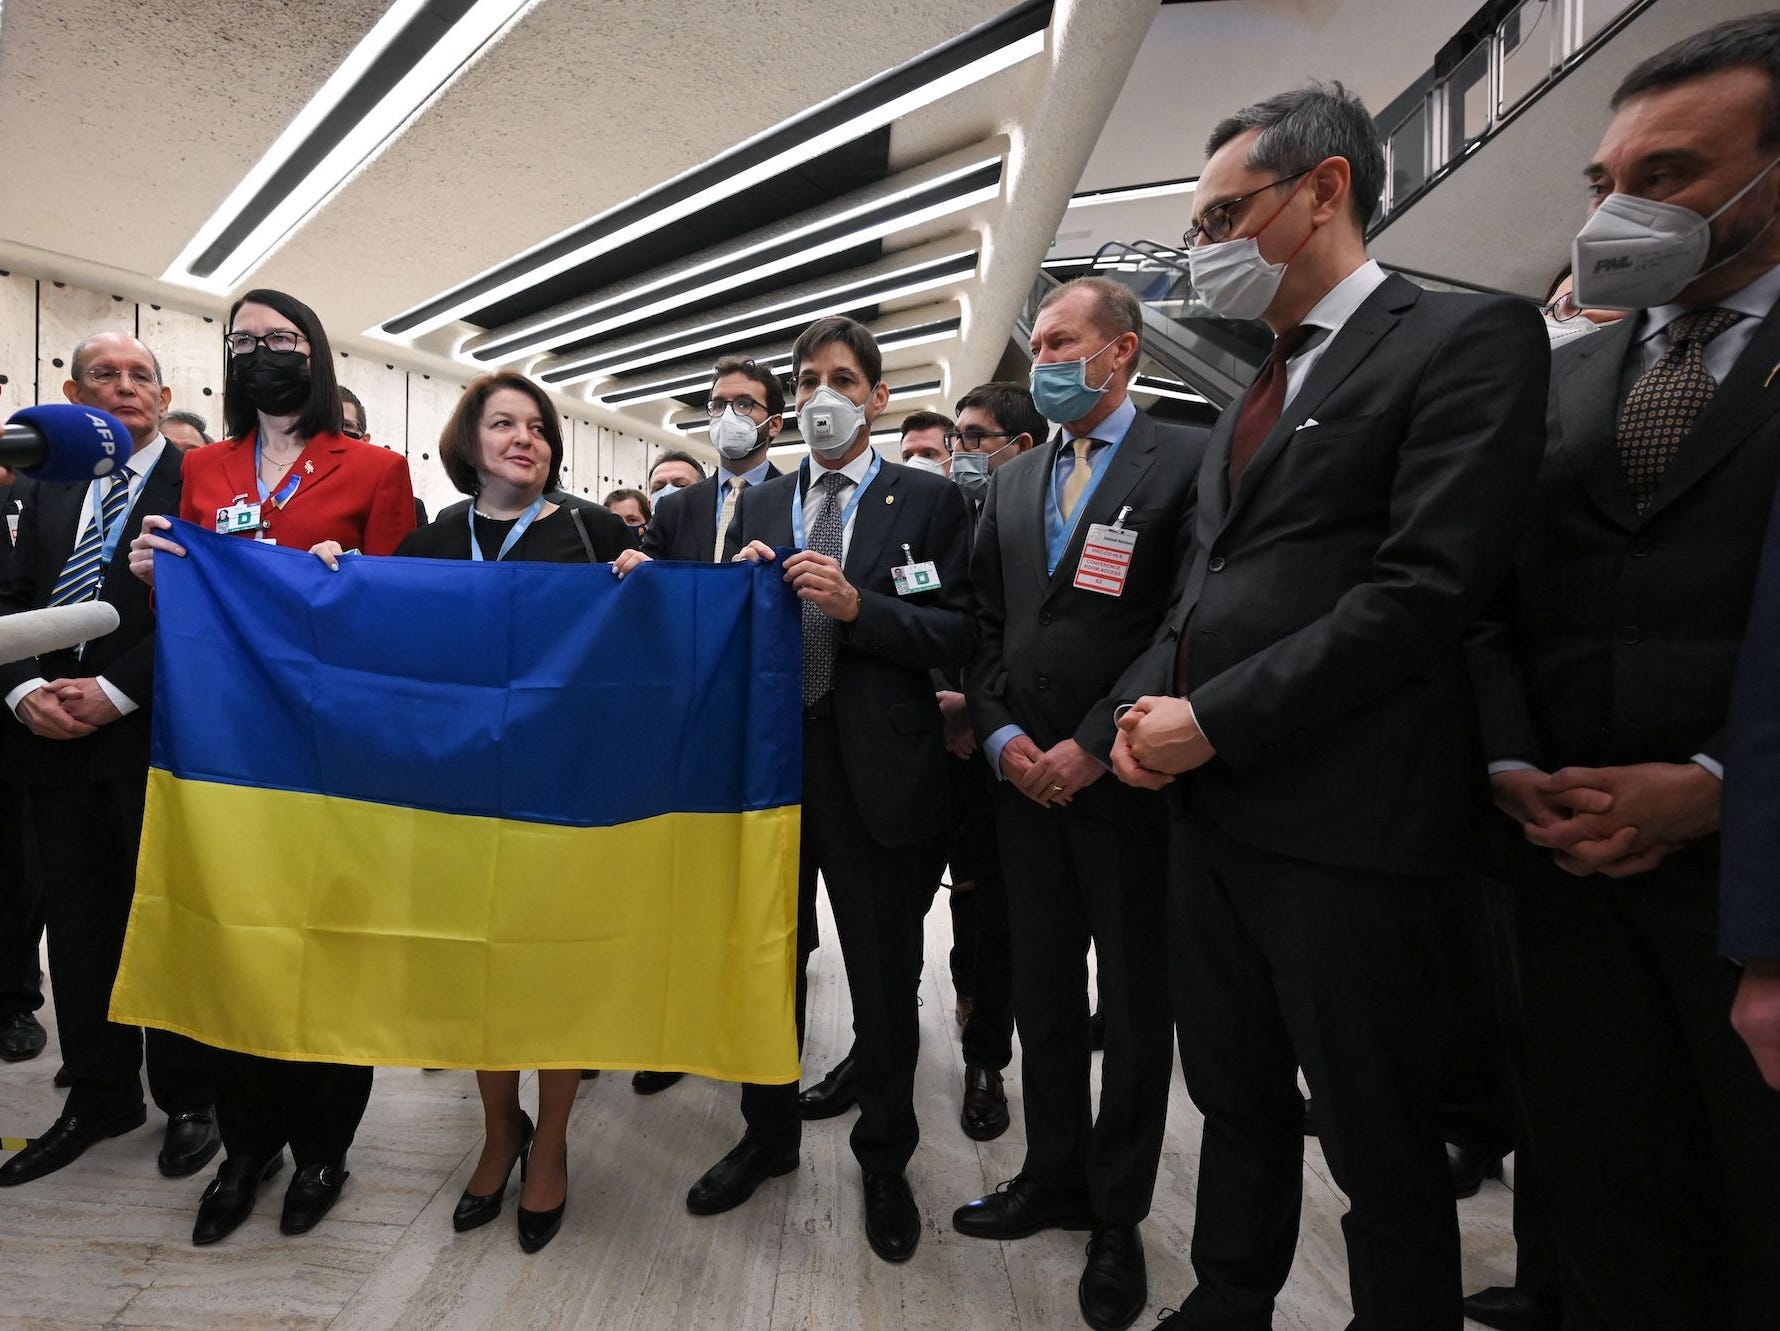 representatives gather around Ukraine's ambassador Yevheniia Filipenko holding a flag after the walkout.